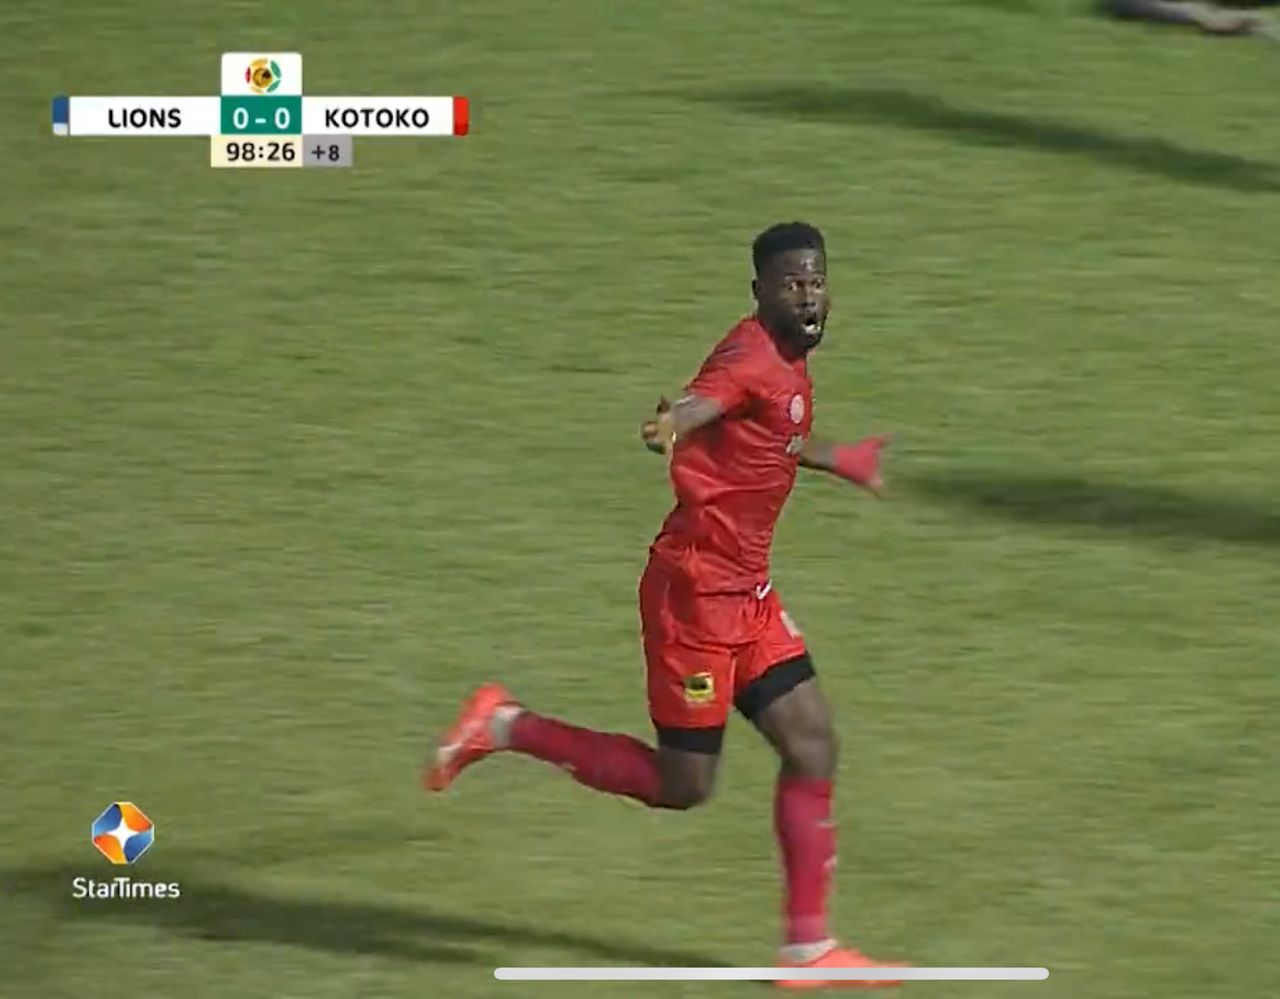 VIDEO: Watch Kalo Ouattara's winning goal for Asante Kotoko against Accra Lions